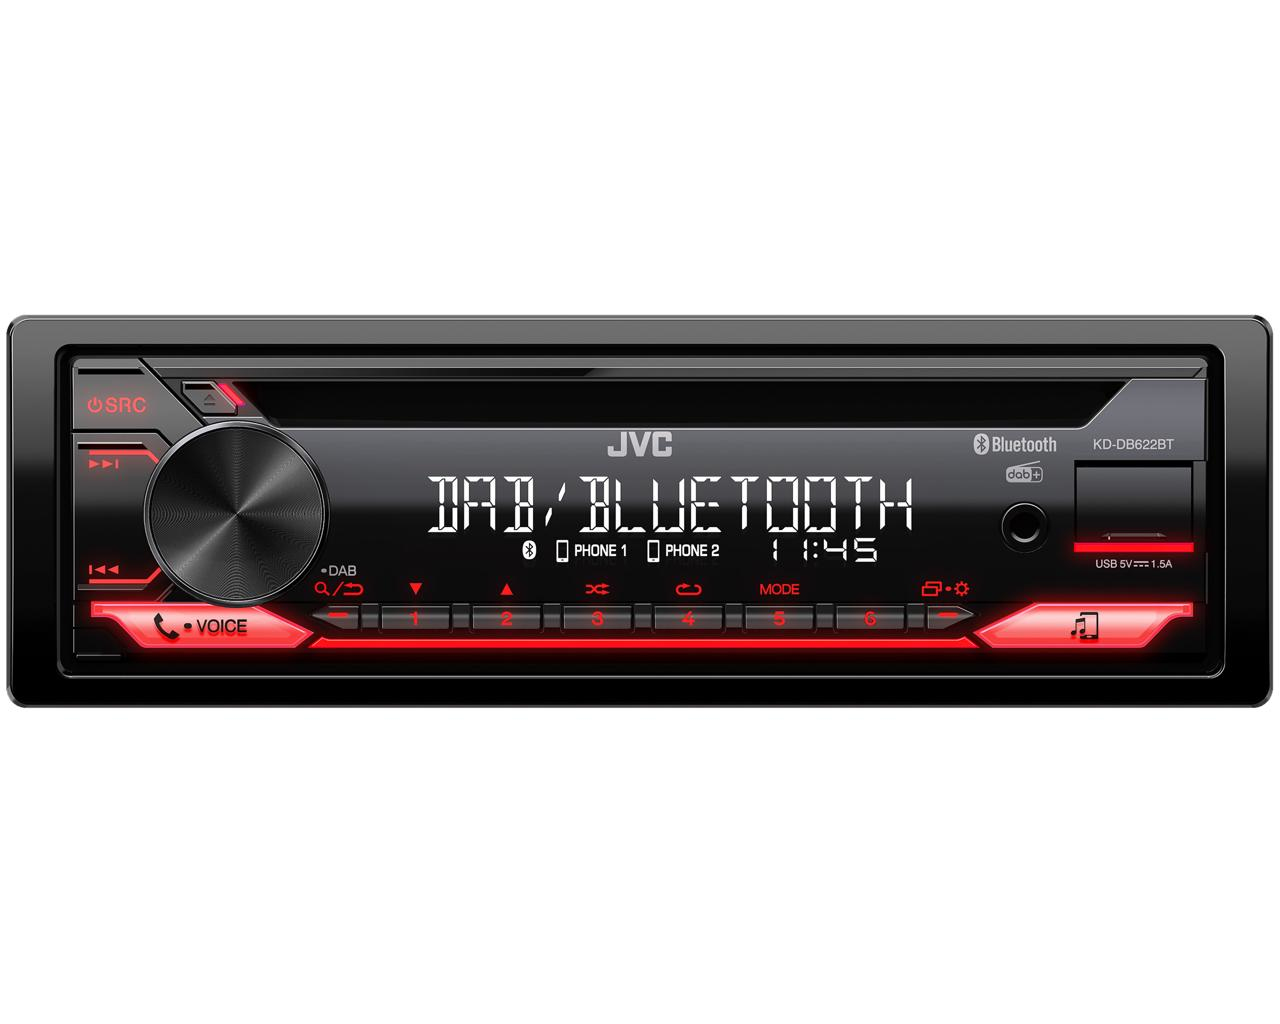 Jvc KD-Db622bt Ricevitore Multimediale Per Auto Nero 200 W Bluetooth